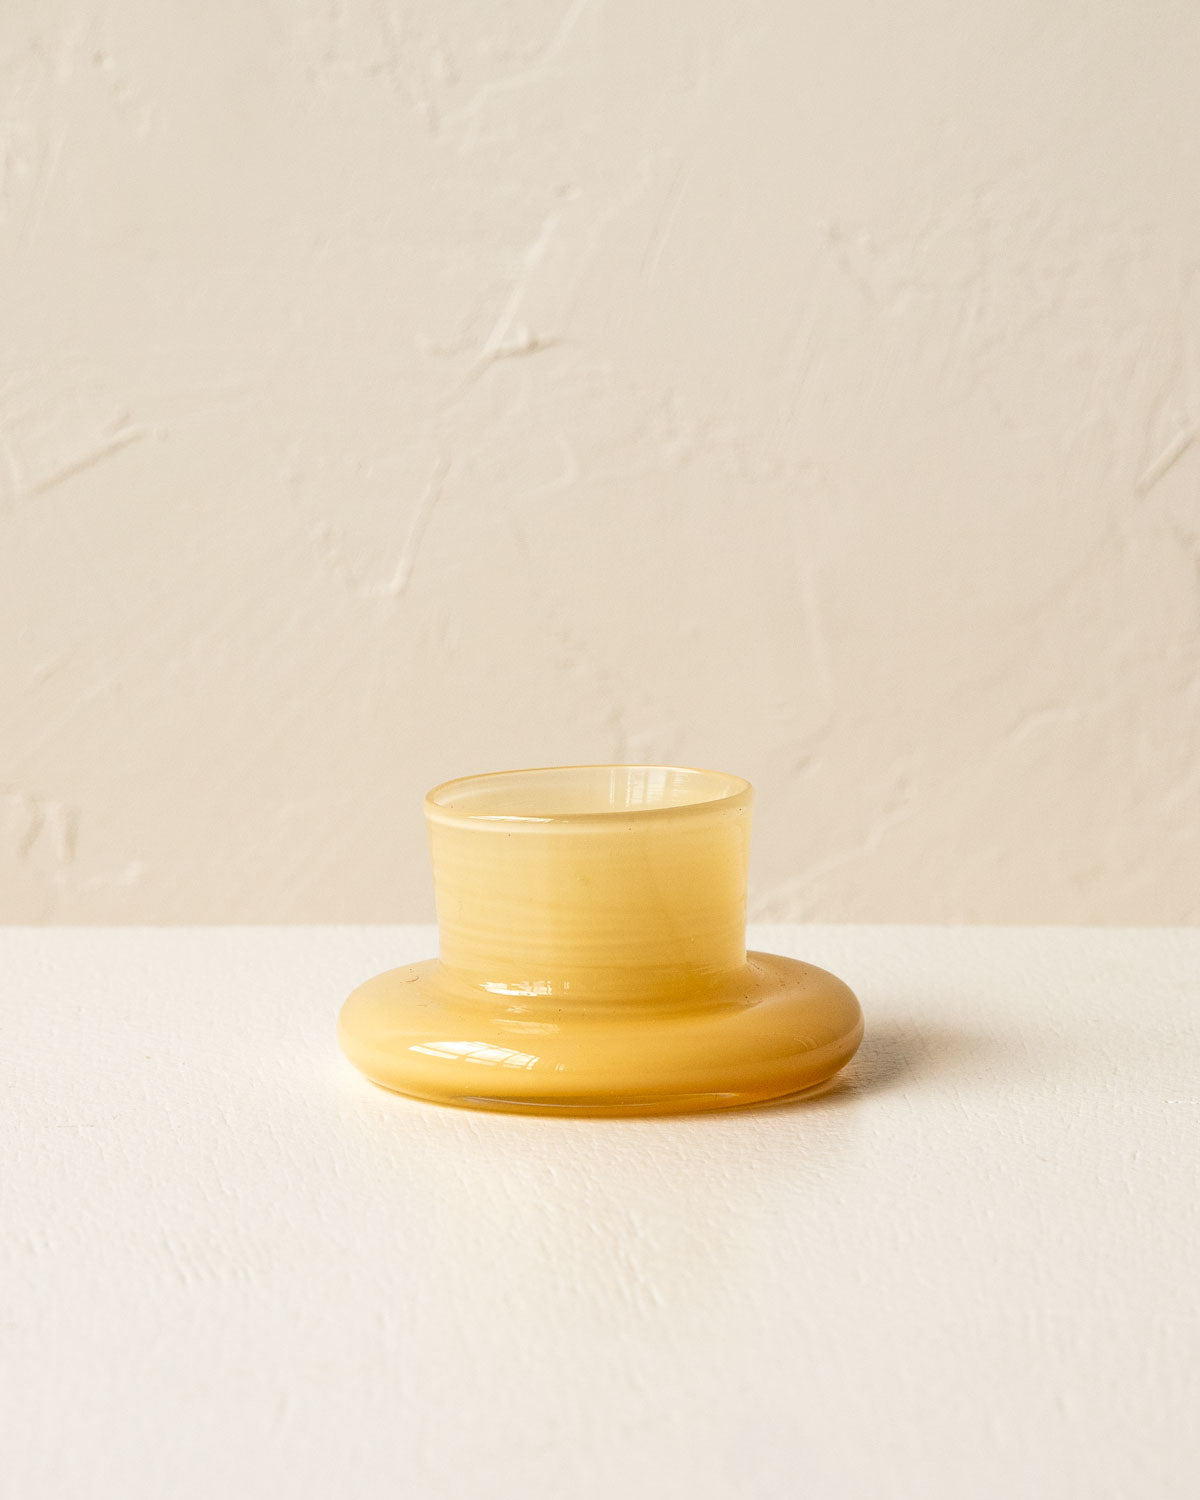 Handmade sandy yellow glass tea light holder